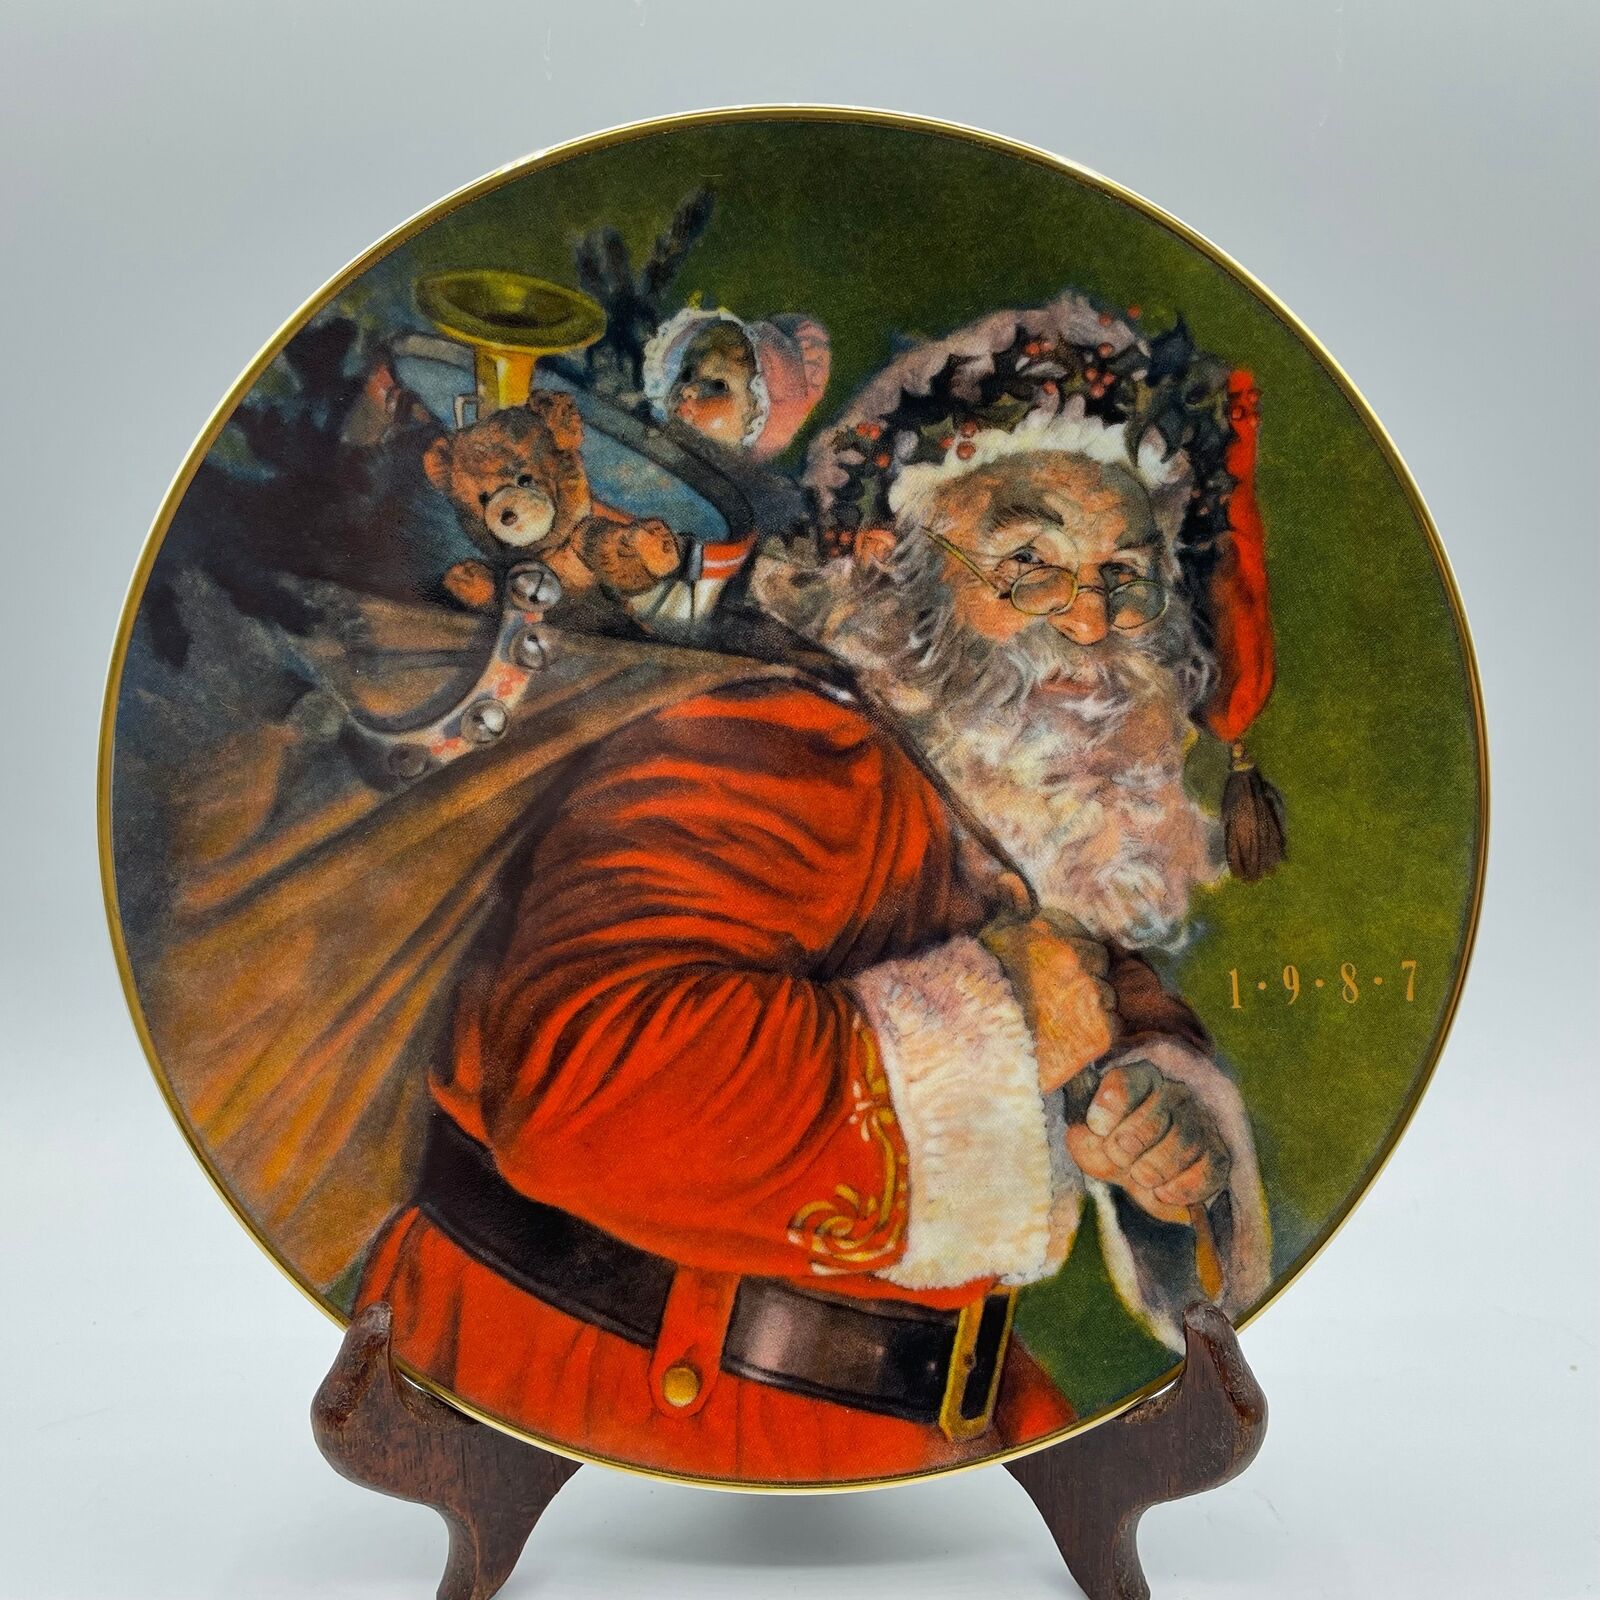 1987 Avon Christmas Collectors Plate The Magic that Santa Brings